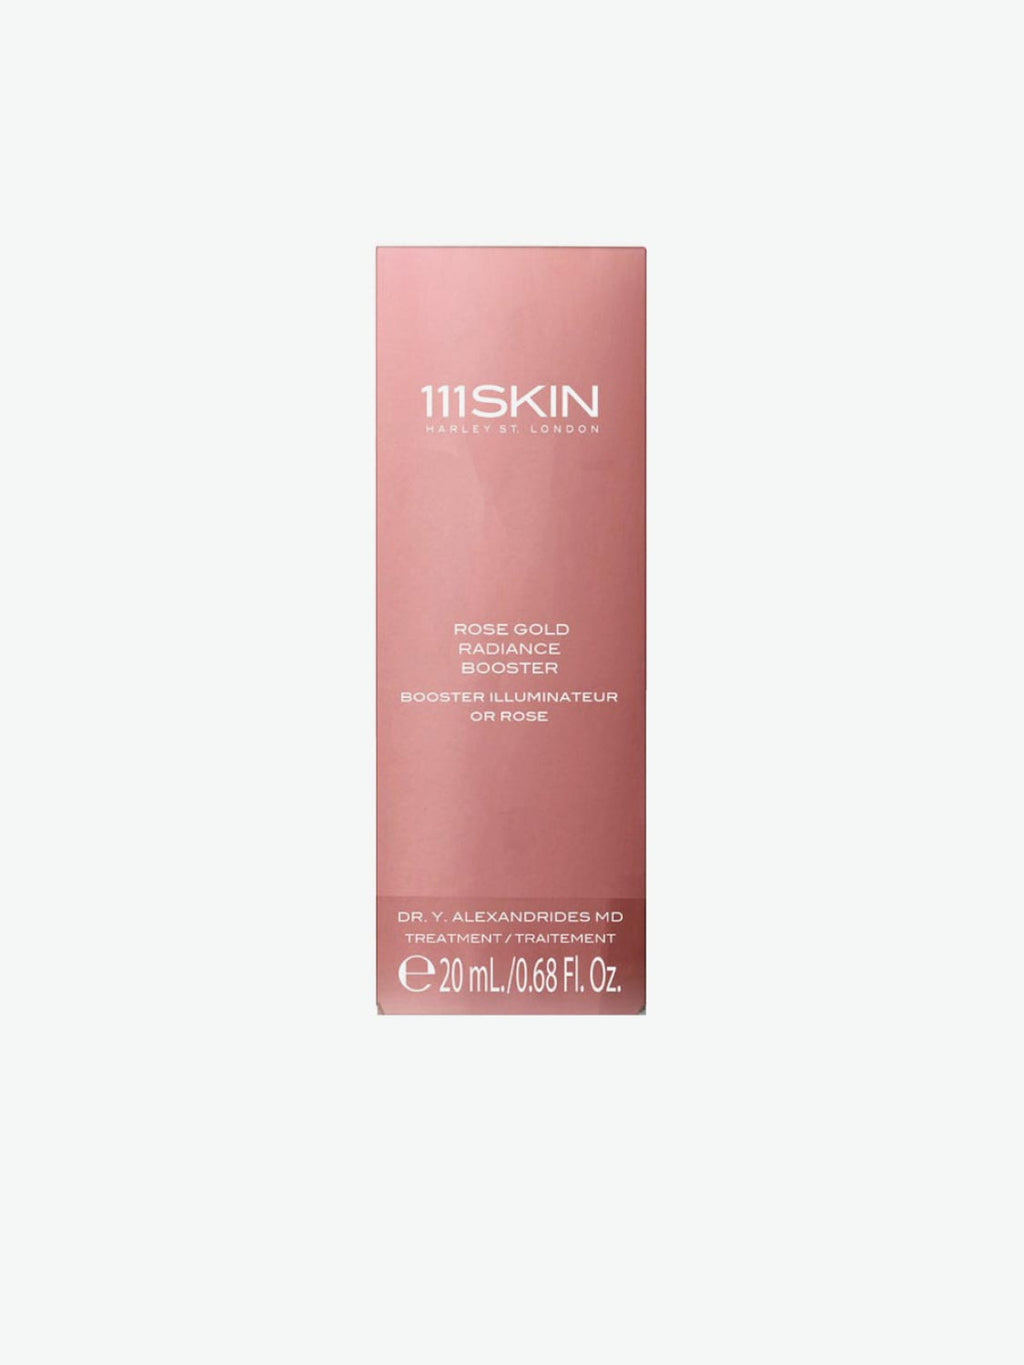 111Skin Rose Gold Radiance Booster | B